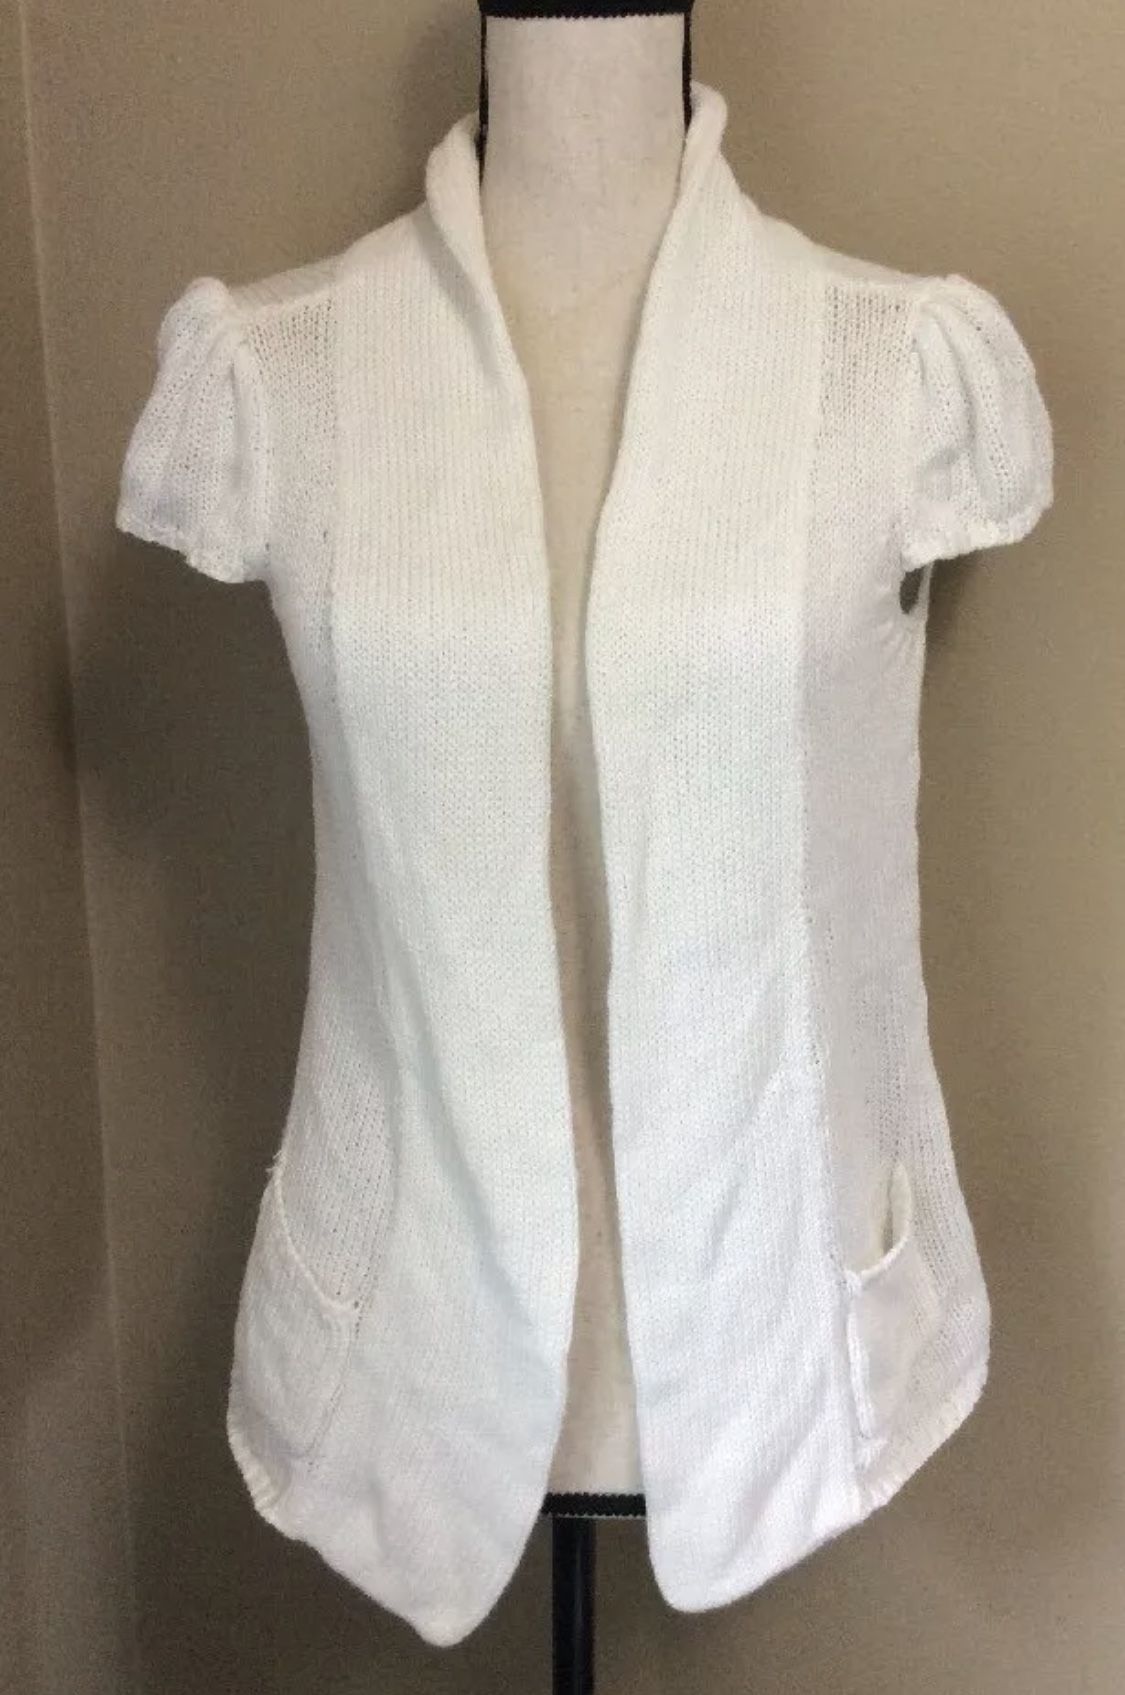 Worthington White Cotton Blend Knit Cardigan Sweater Vest sz M cap sleeves